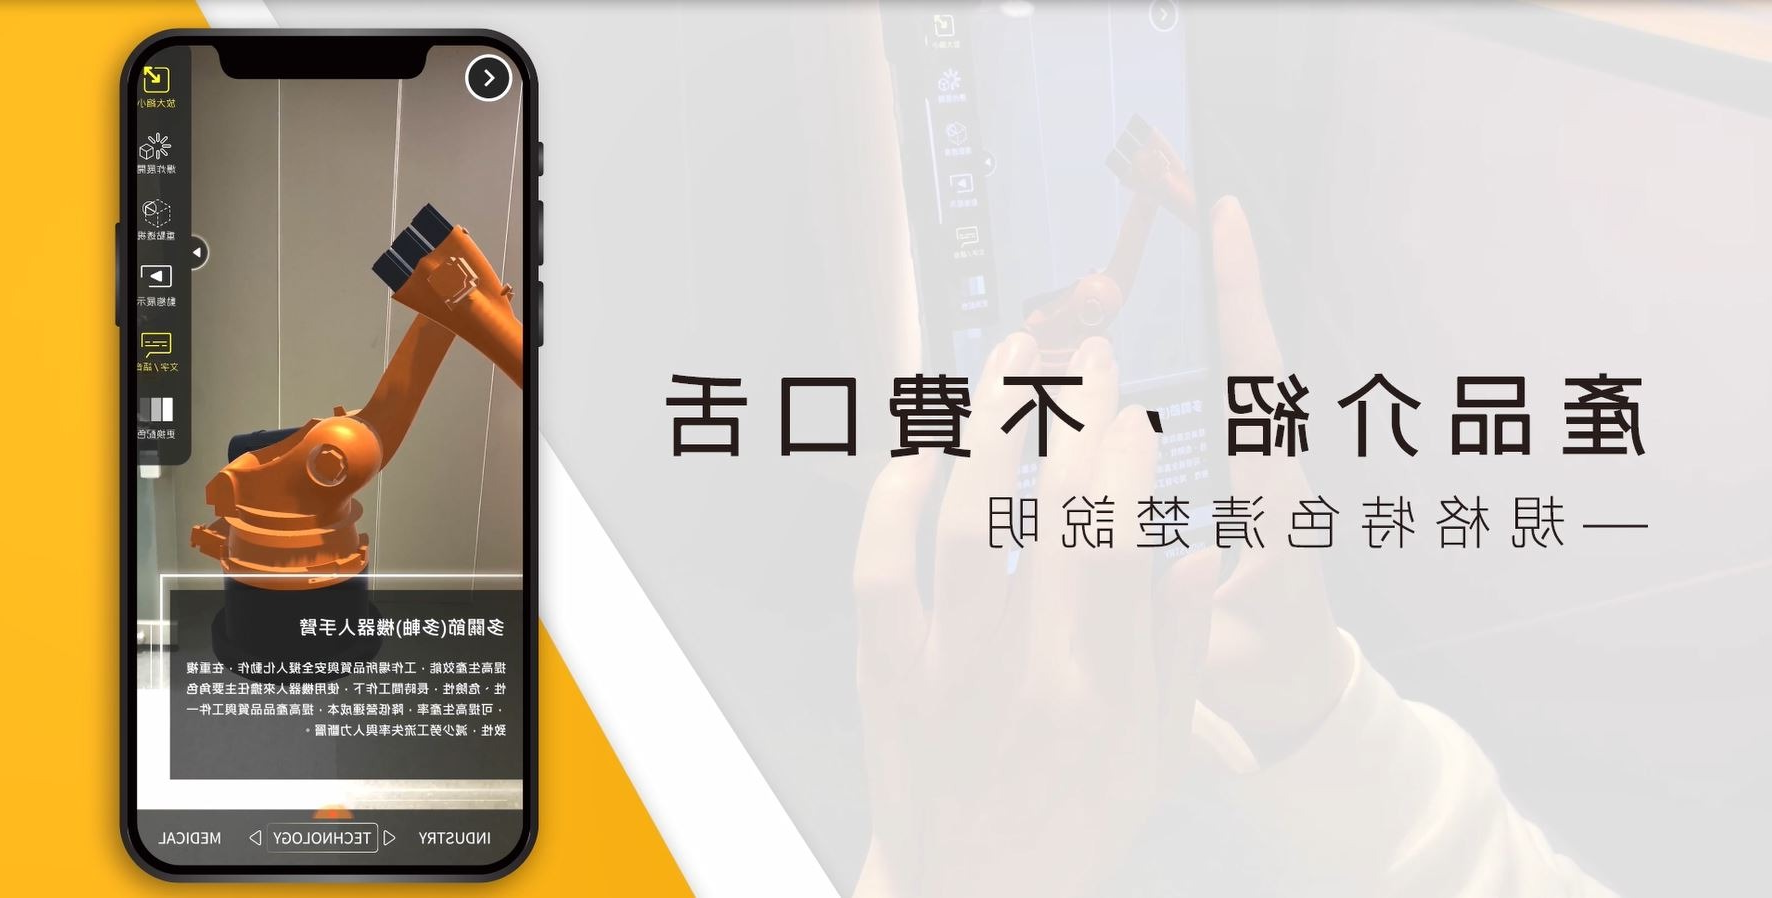 Consumer experience augmented reality AR AR application